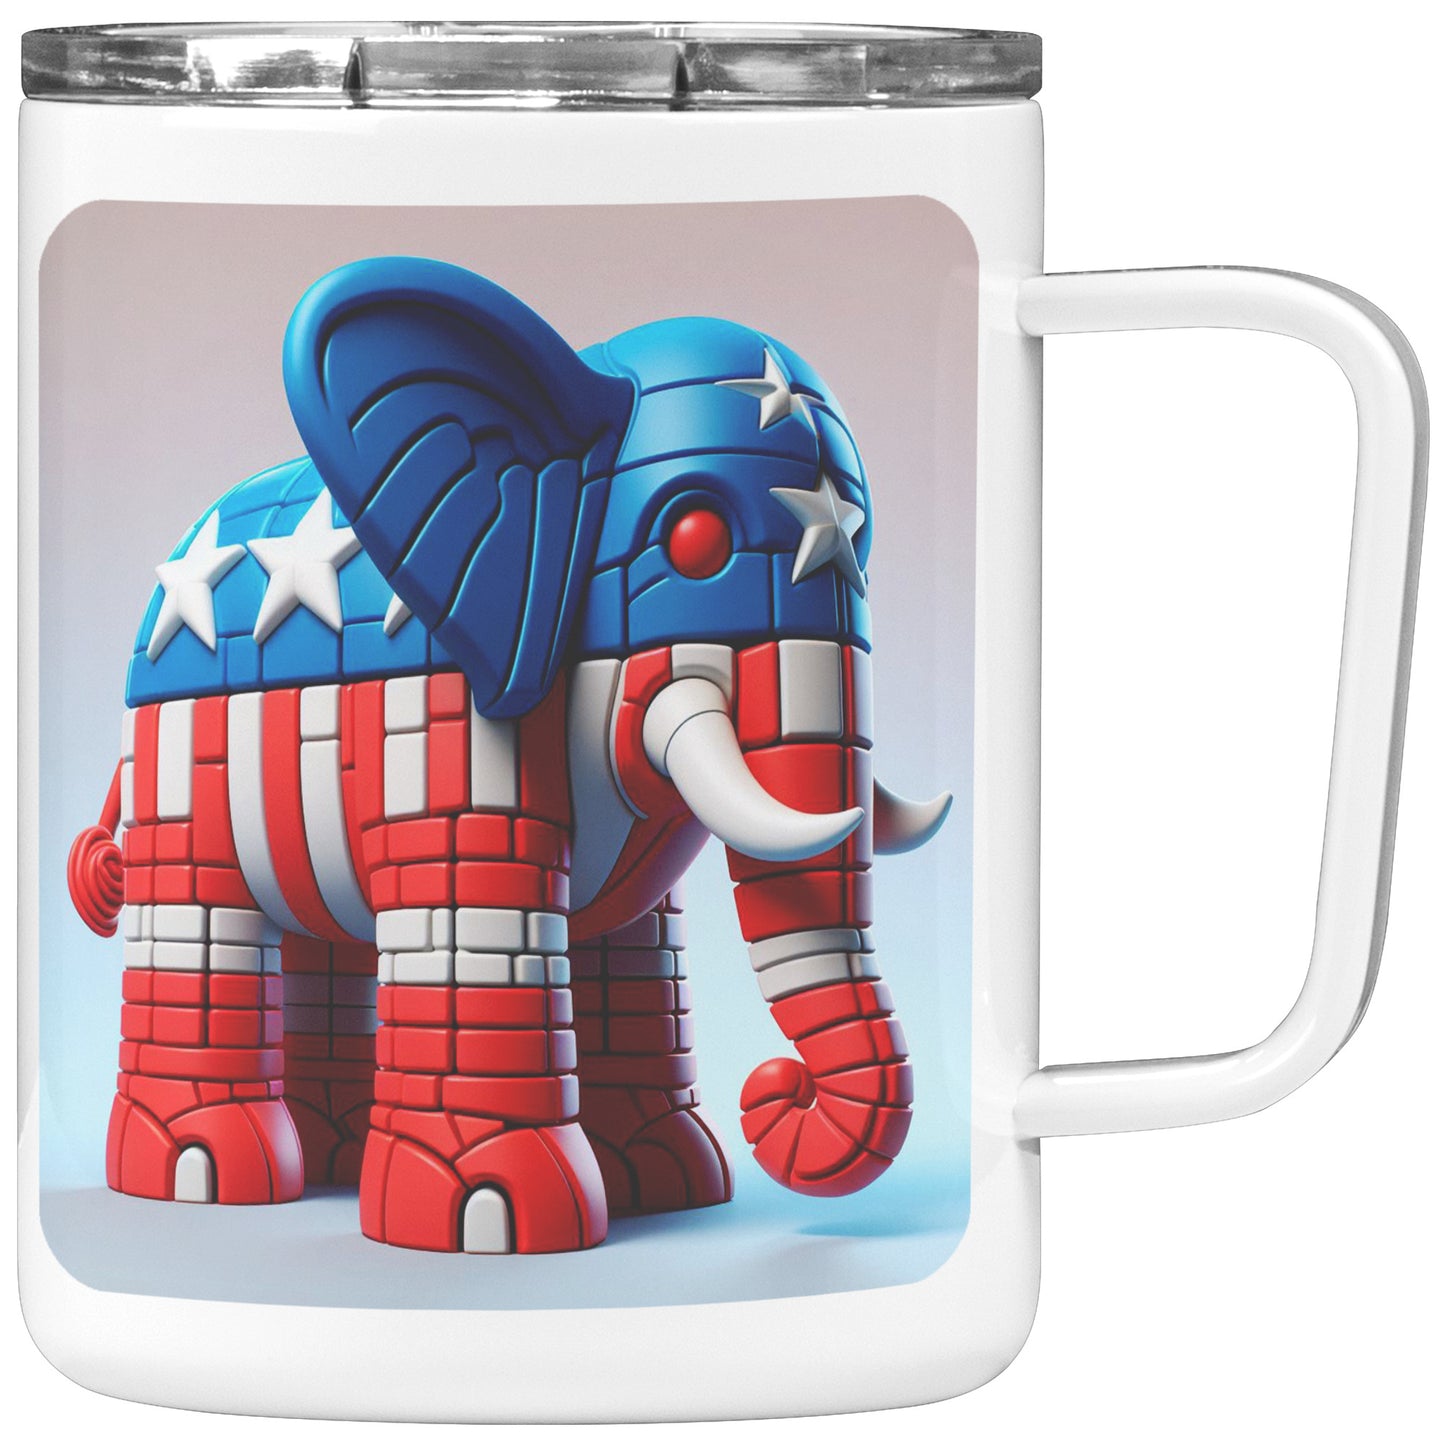 US Political Symbol for Republicans - Coffee Mug #2